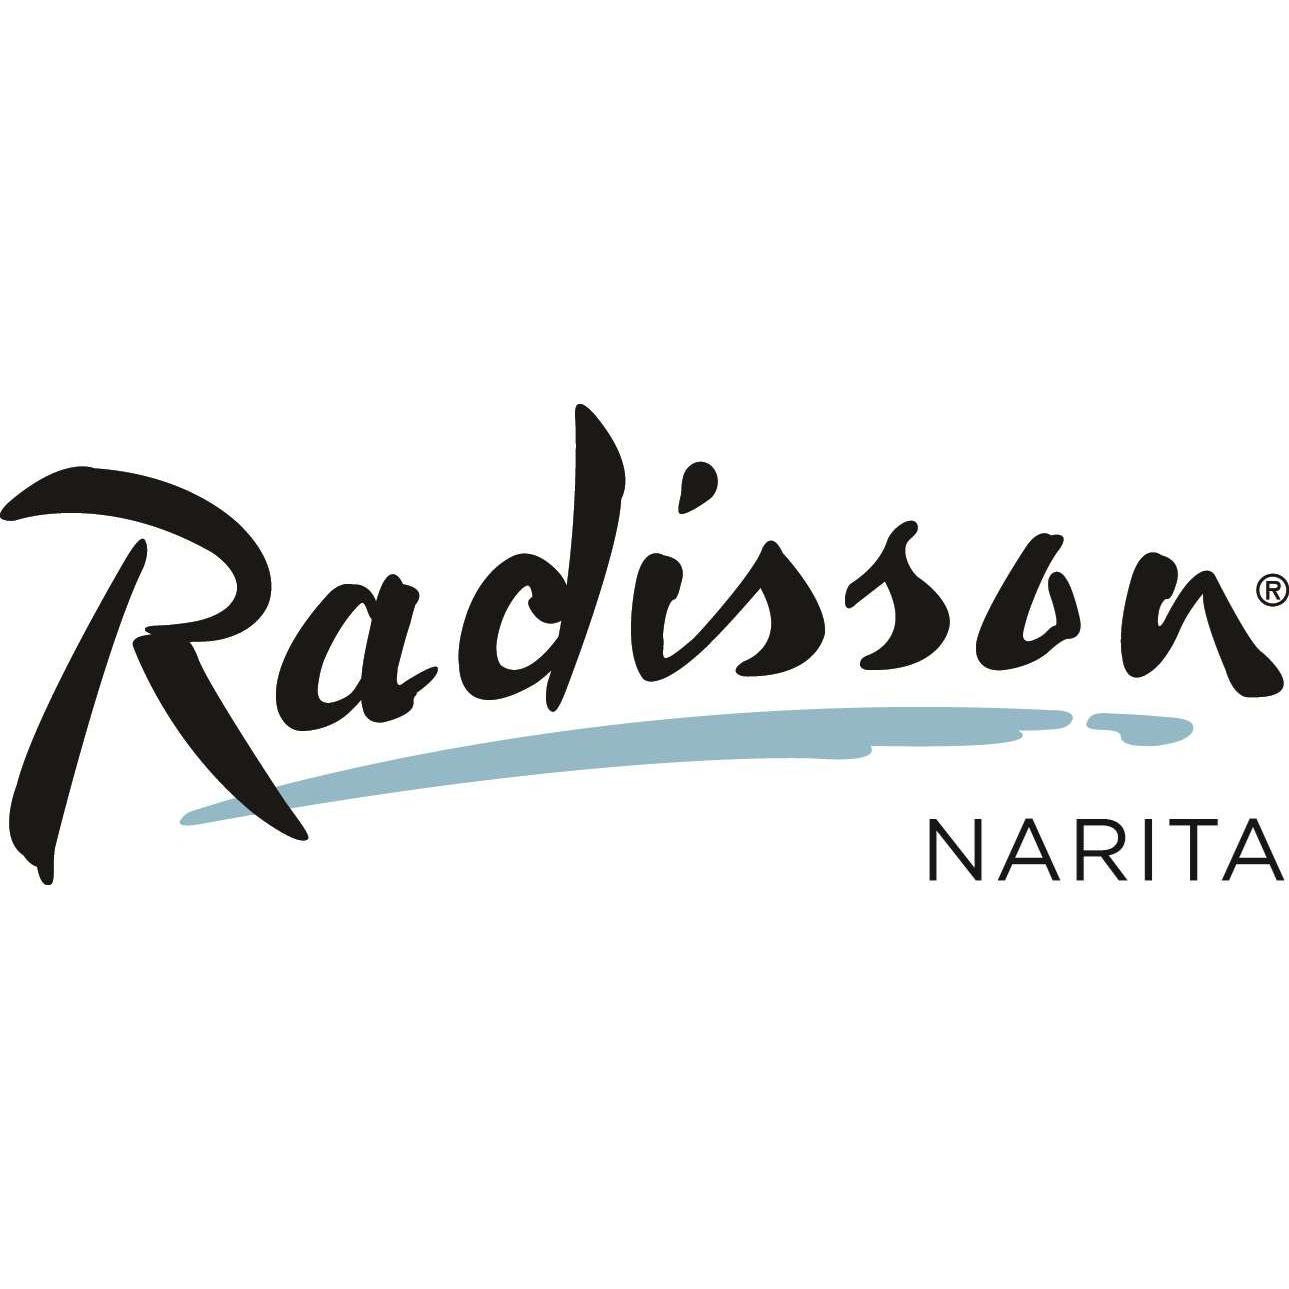 Radisson Narita - Closed Logo